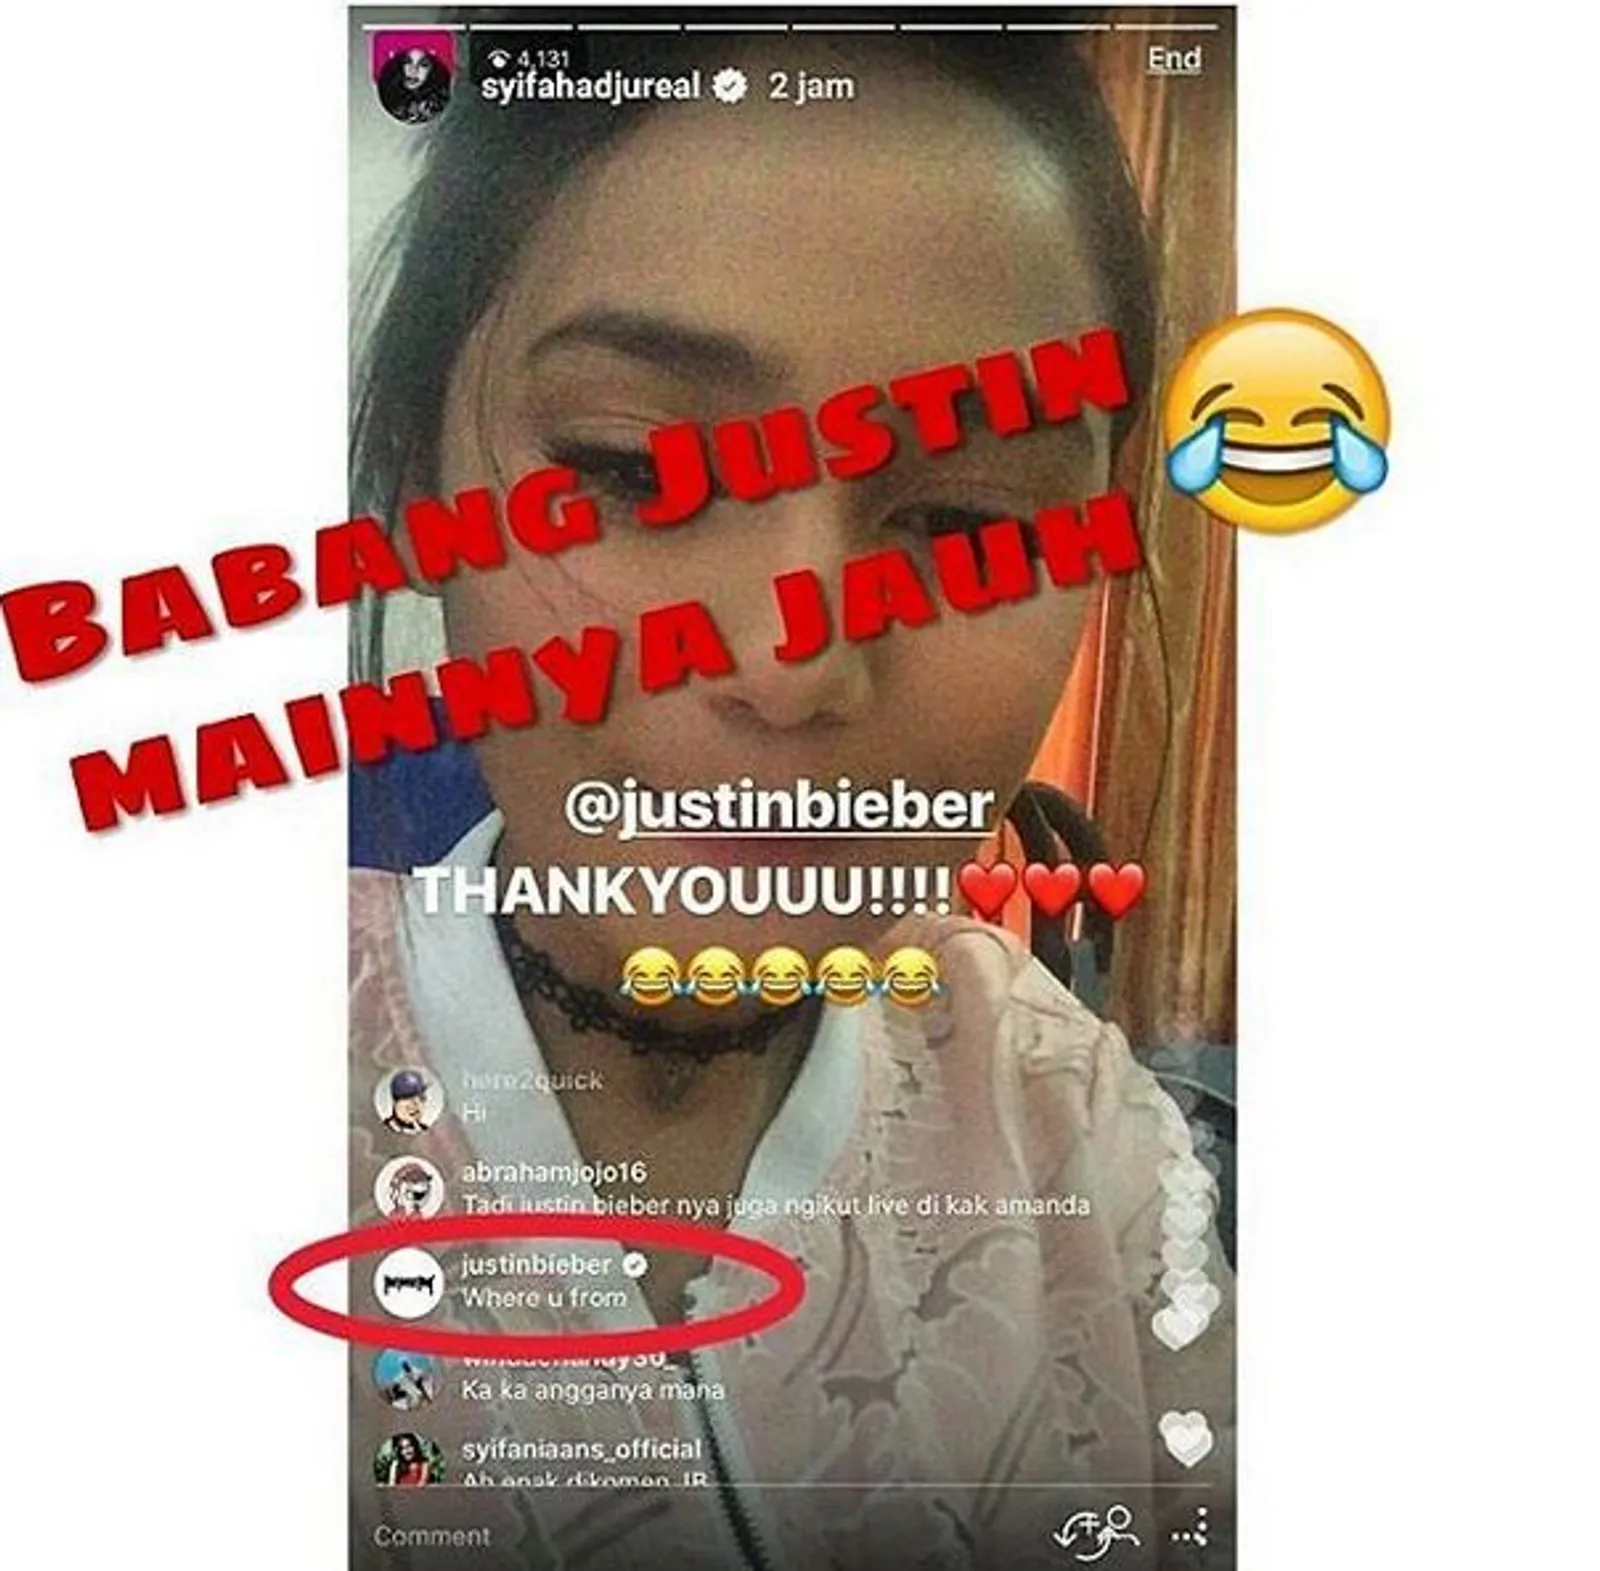 Vanesha Prescilla dan 4 Orang Indonesia ini Di-follow Justin Bieber